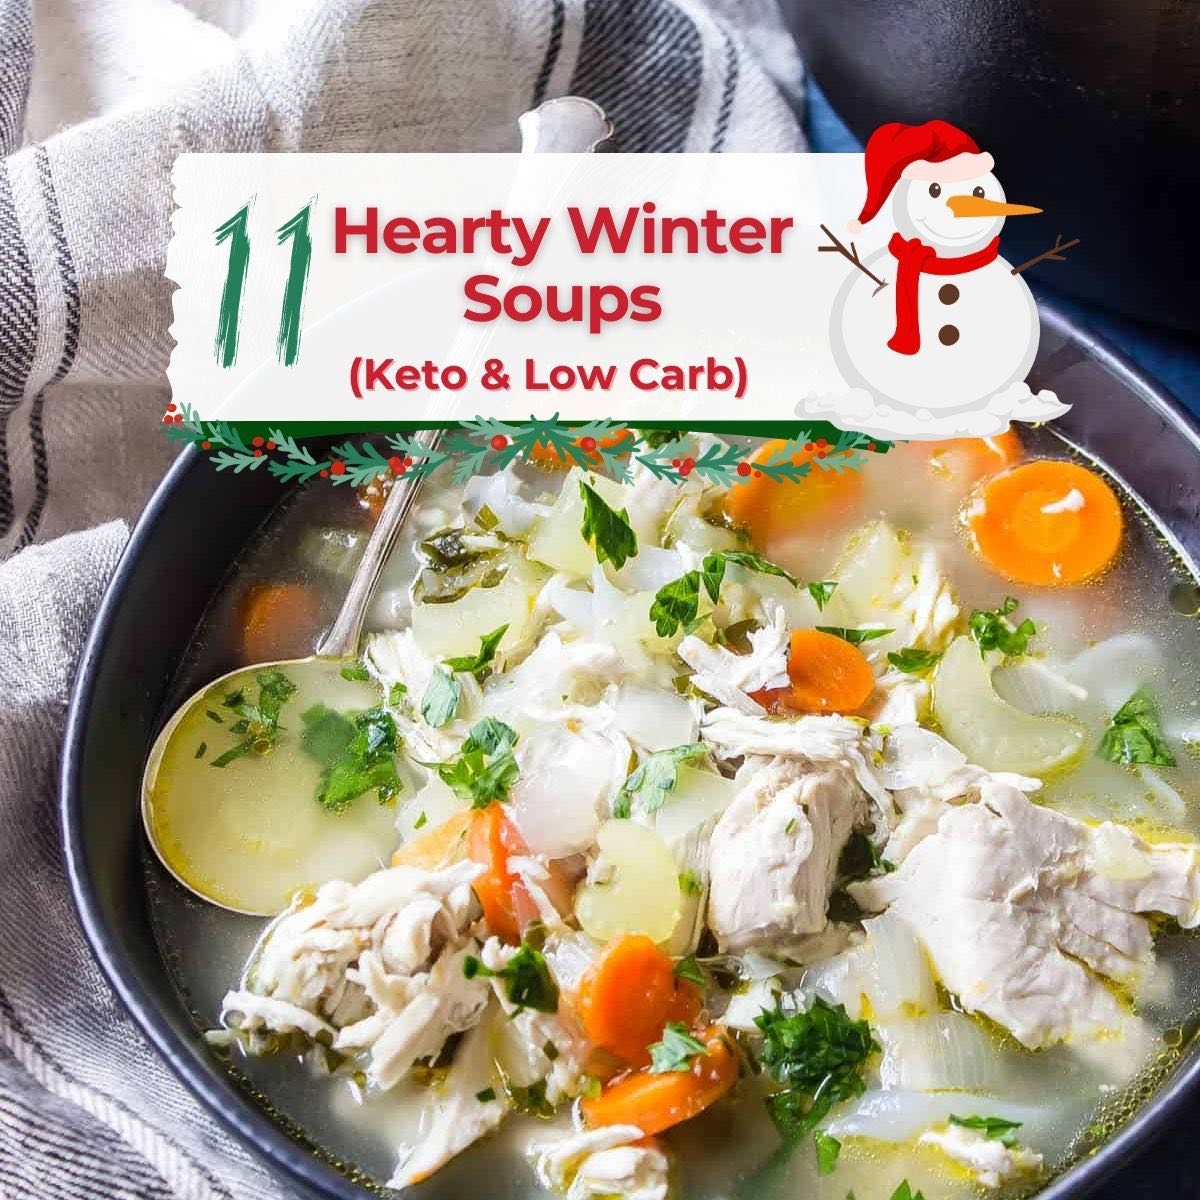 Savor the Season: 11 Hearty Winter Soups (Keto & Low Carb)